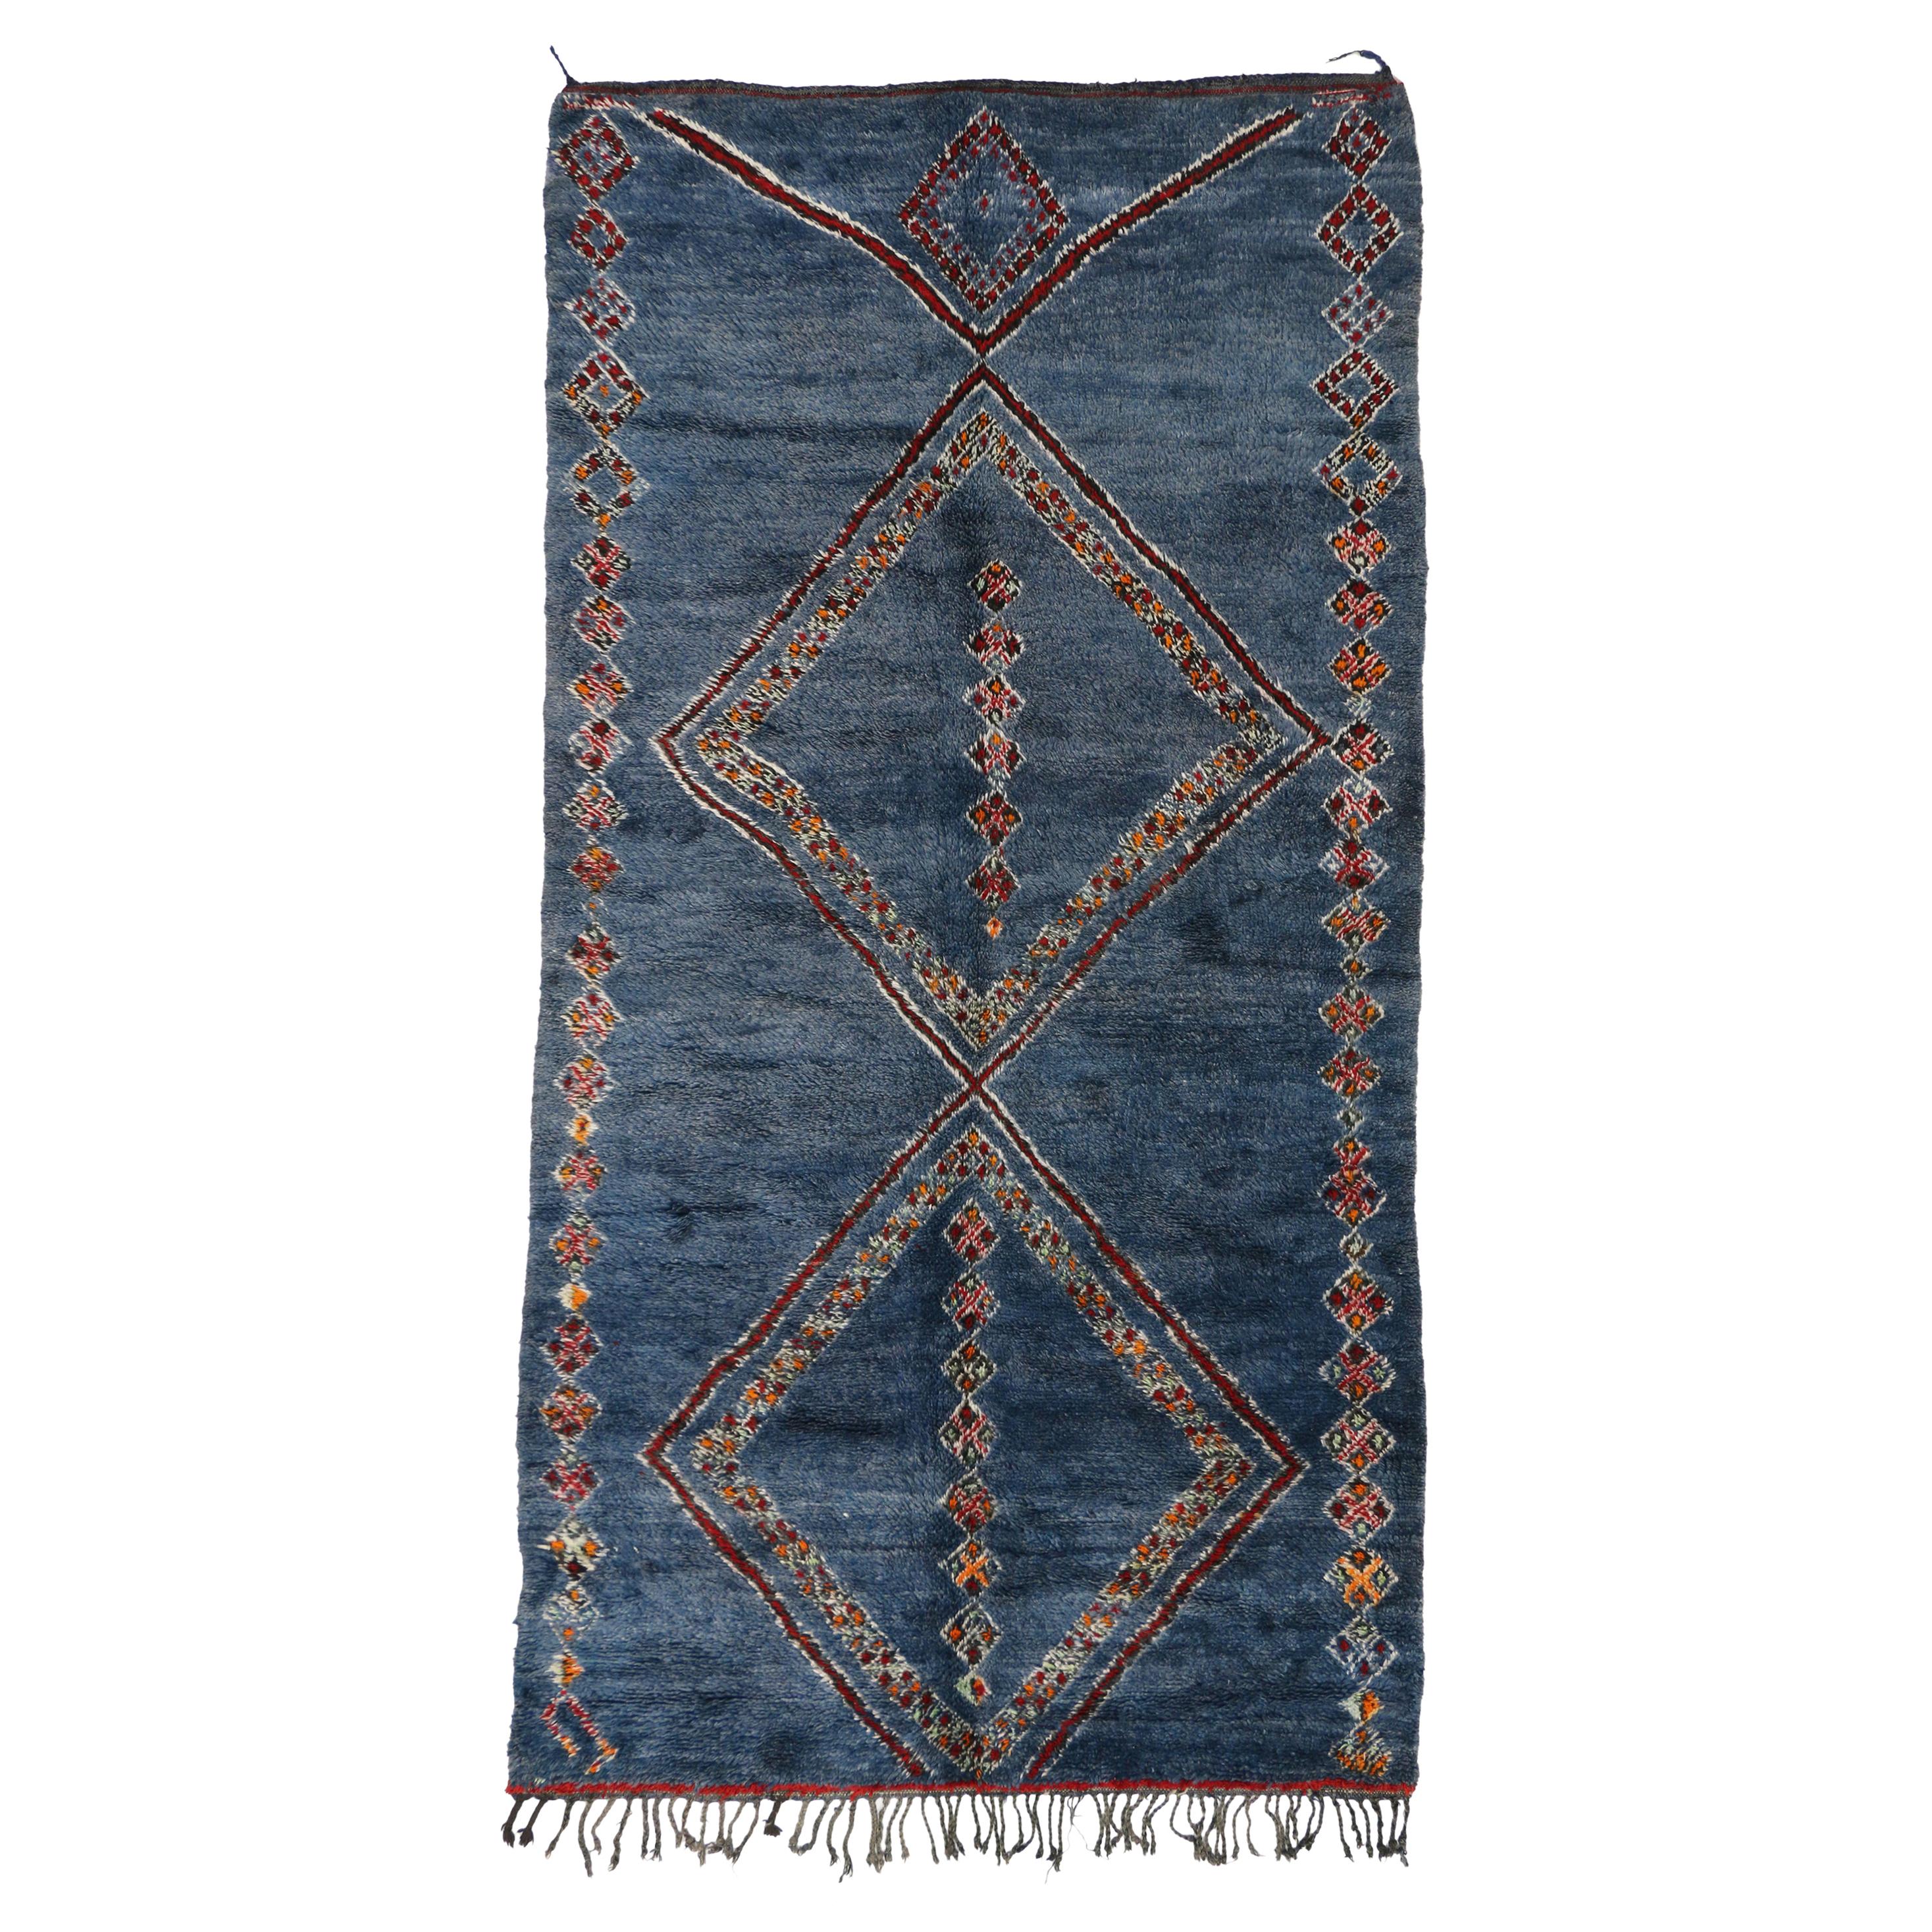 Vintage Blue Indigo Beni M'Guild Moroccan Rug with Tribal Style